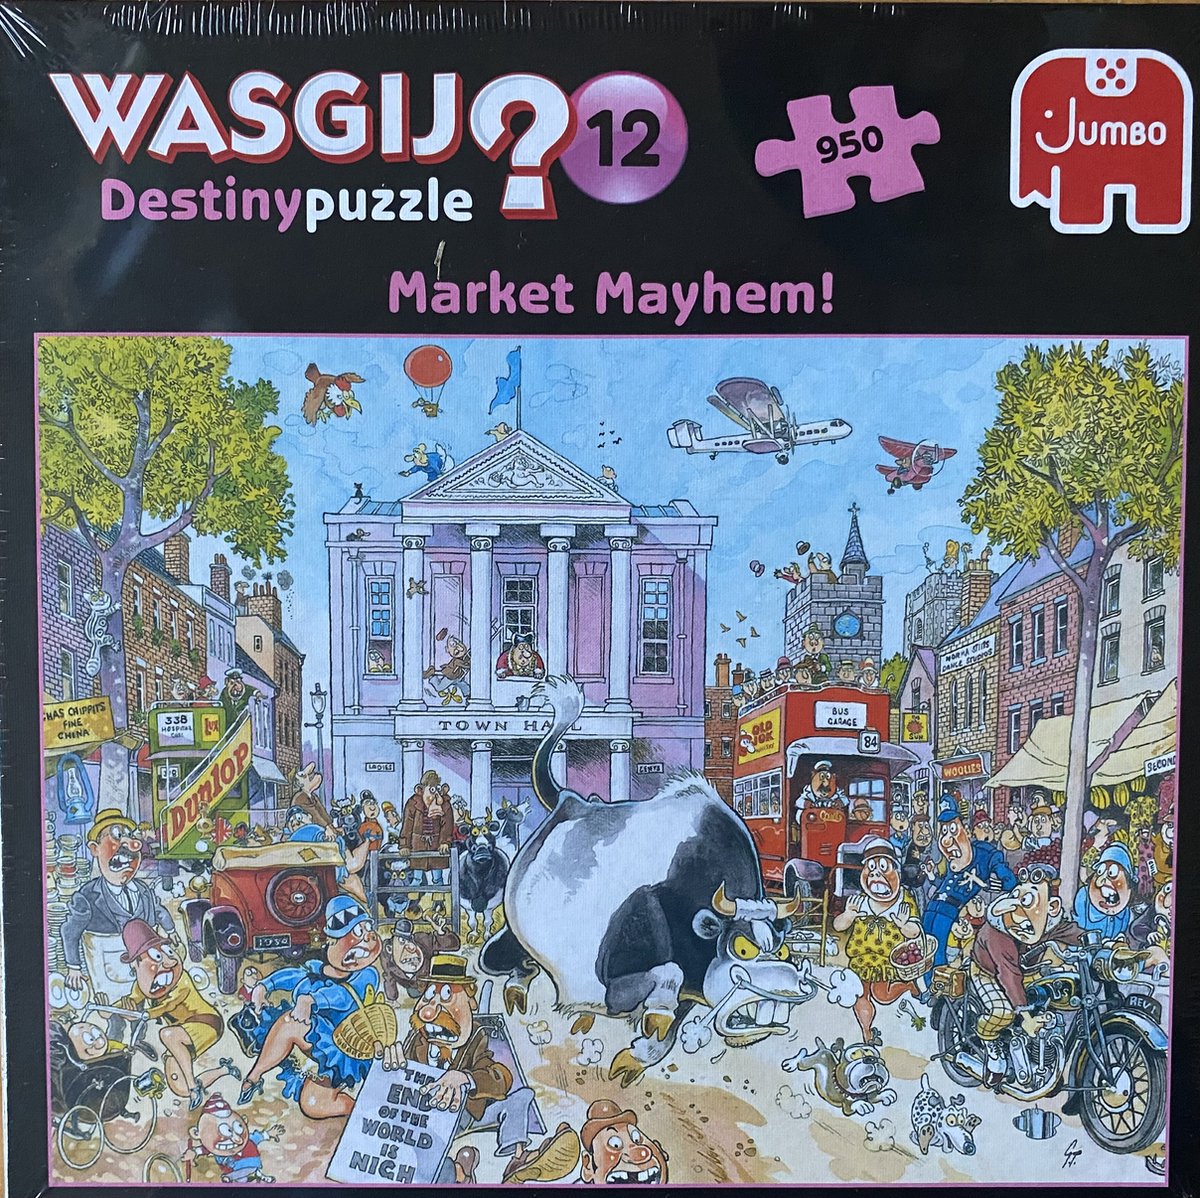 Wasgij Destiny 12 Market Mayhem! Puzzel - 950 stukjes